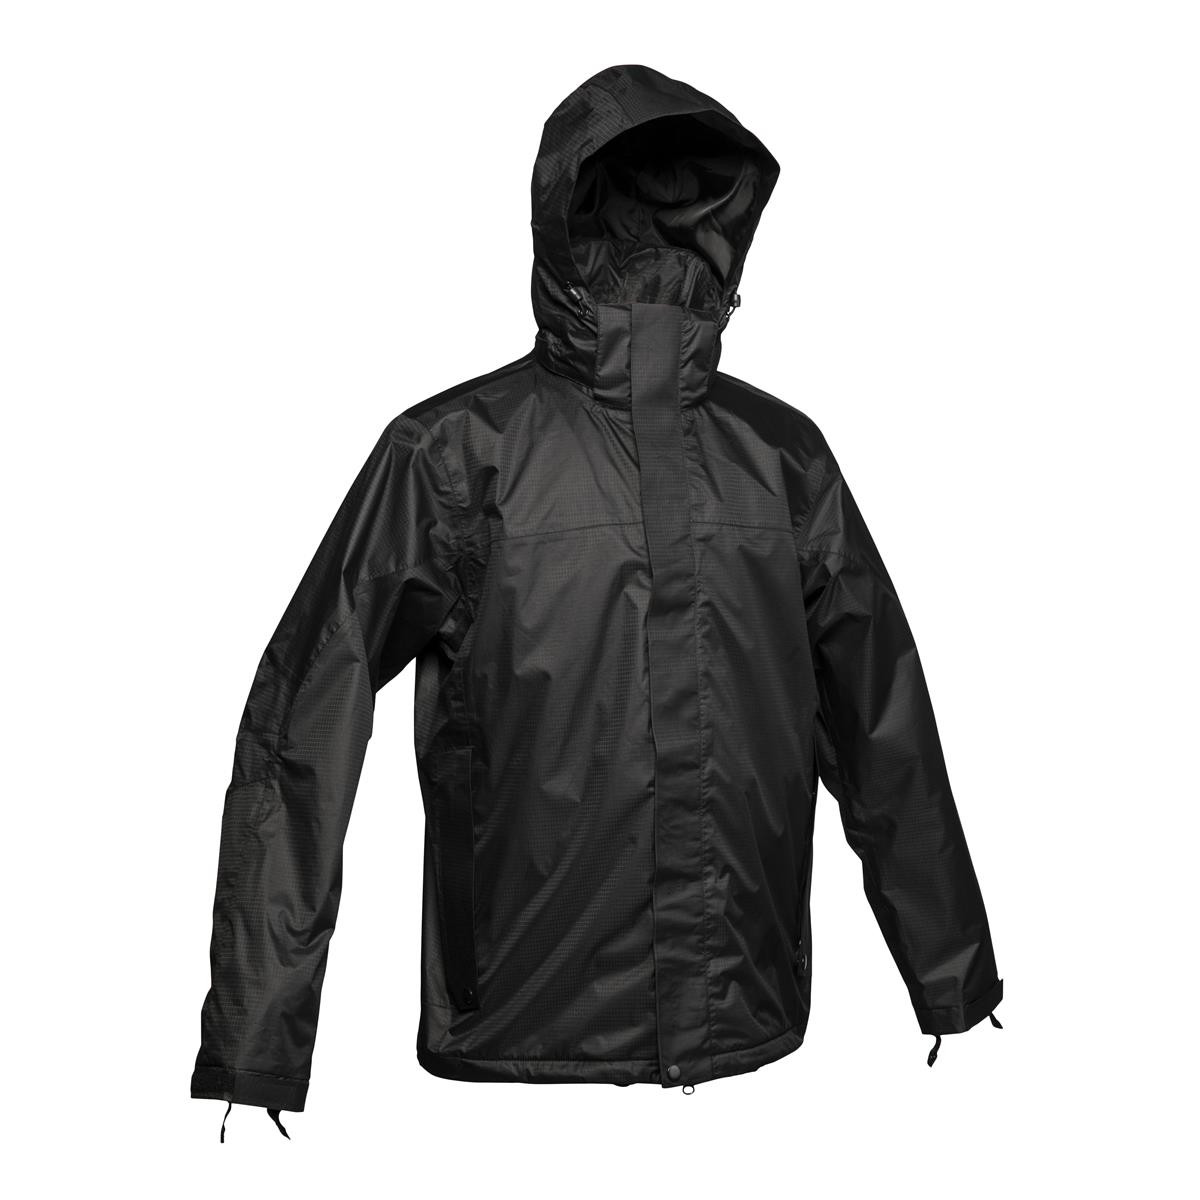 Promotional Reyes Unisex 3-in-1 Jacket - Quality Waterproof Jackets